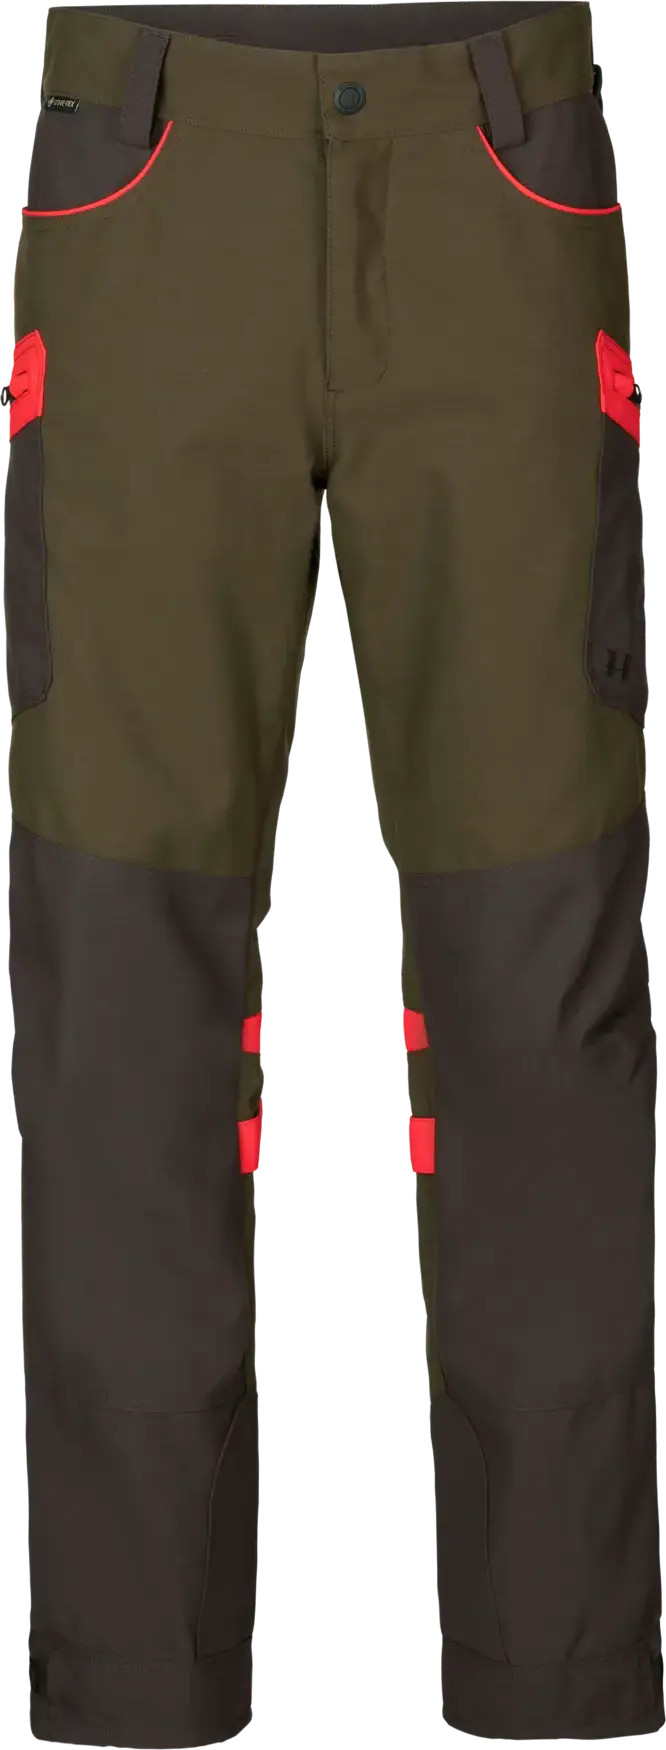 Men’s Pro Hunter Dog Keeper GORE-TEX Trousers Willow Green/Orange